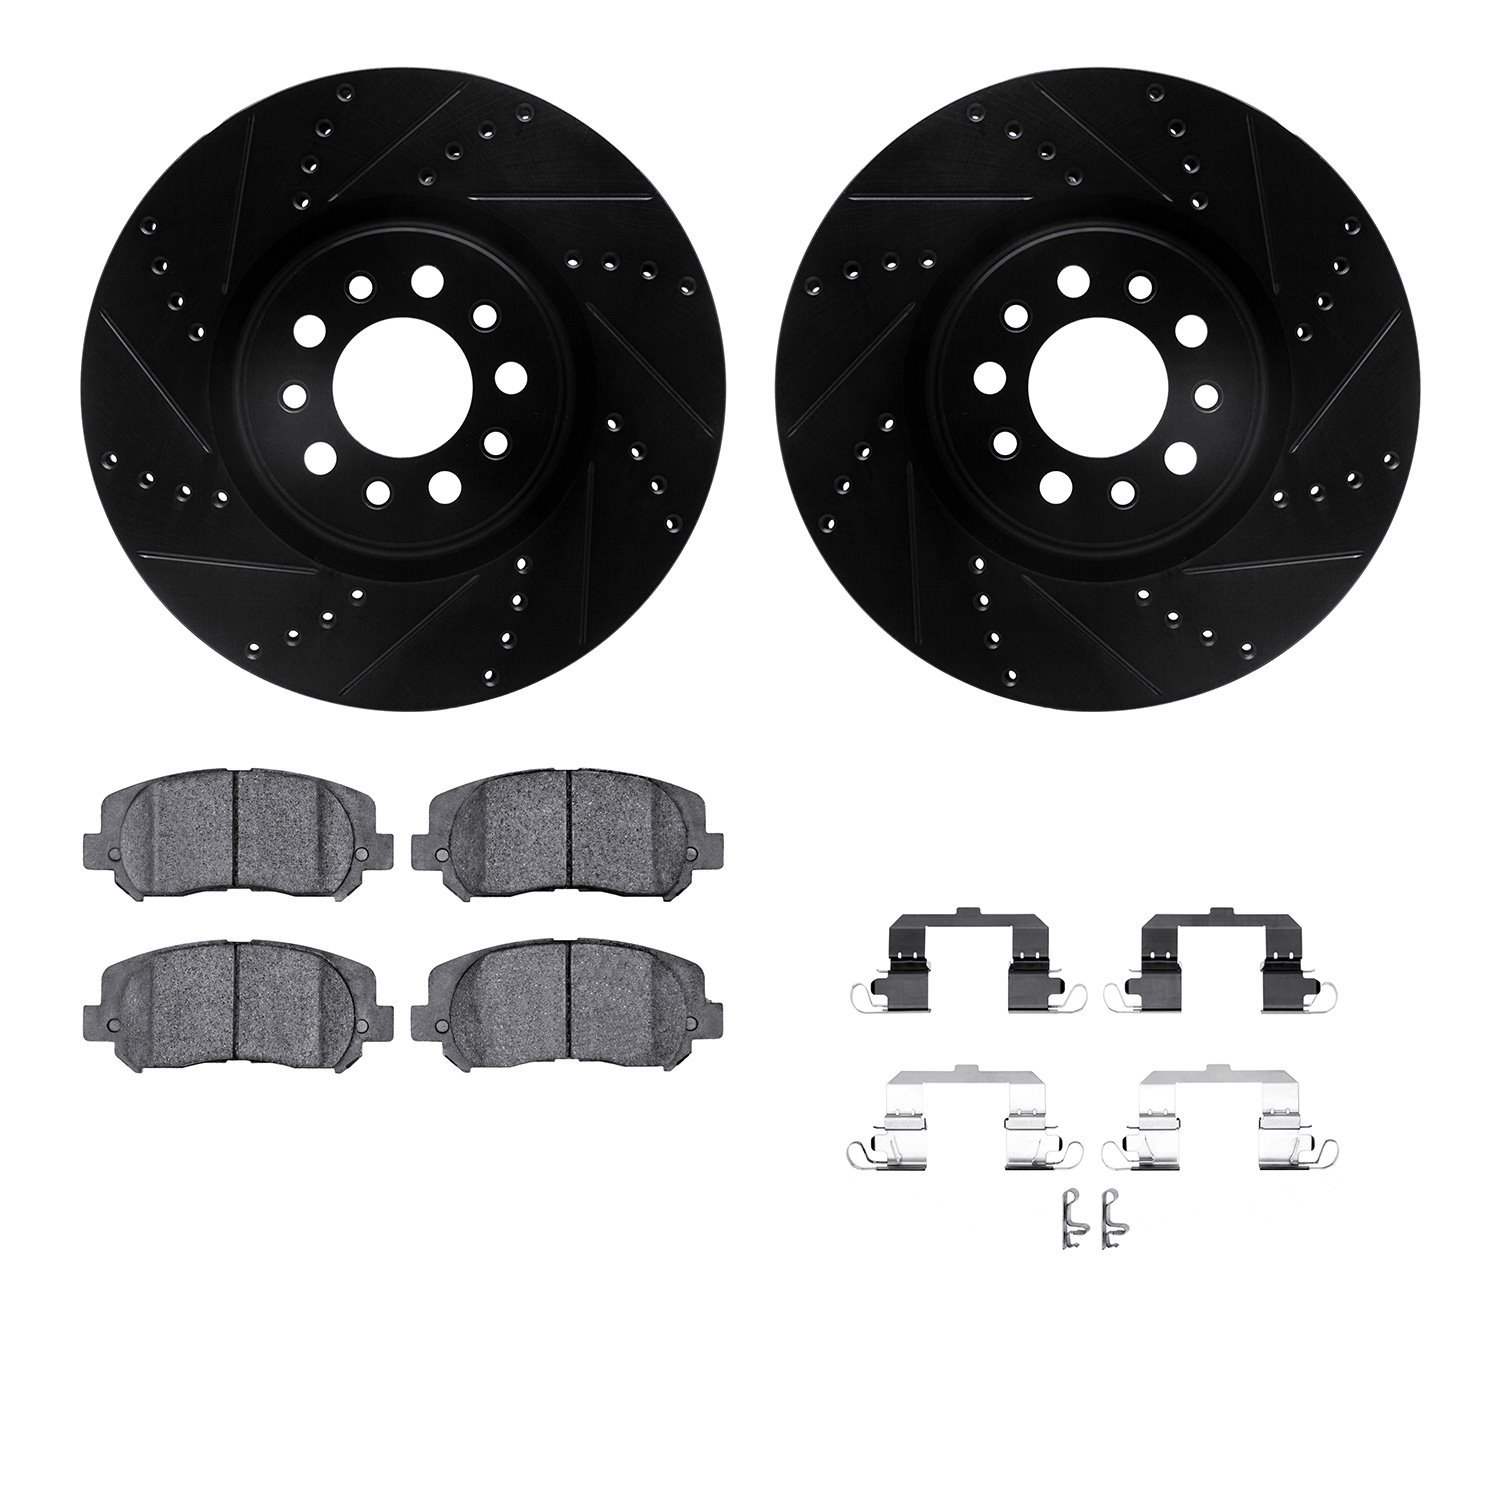 8412-42015 Drilled/Slotted Brake Rotors with Ultimate-Duty Brake Pads Kit & Hardware [Black], Fits Select Mopar, Position: Front